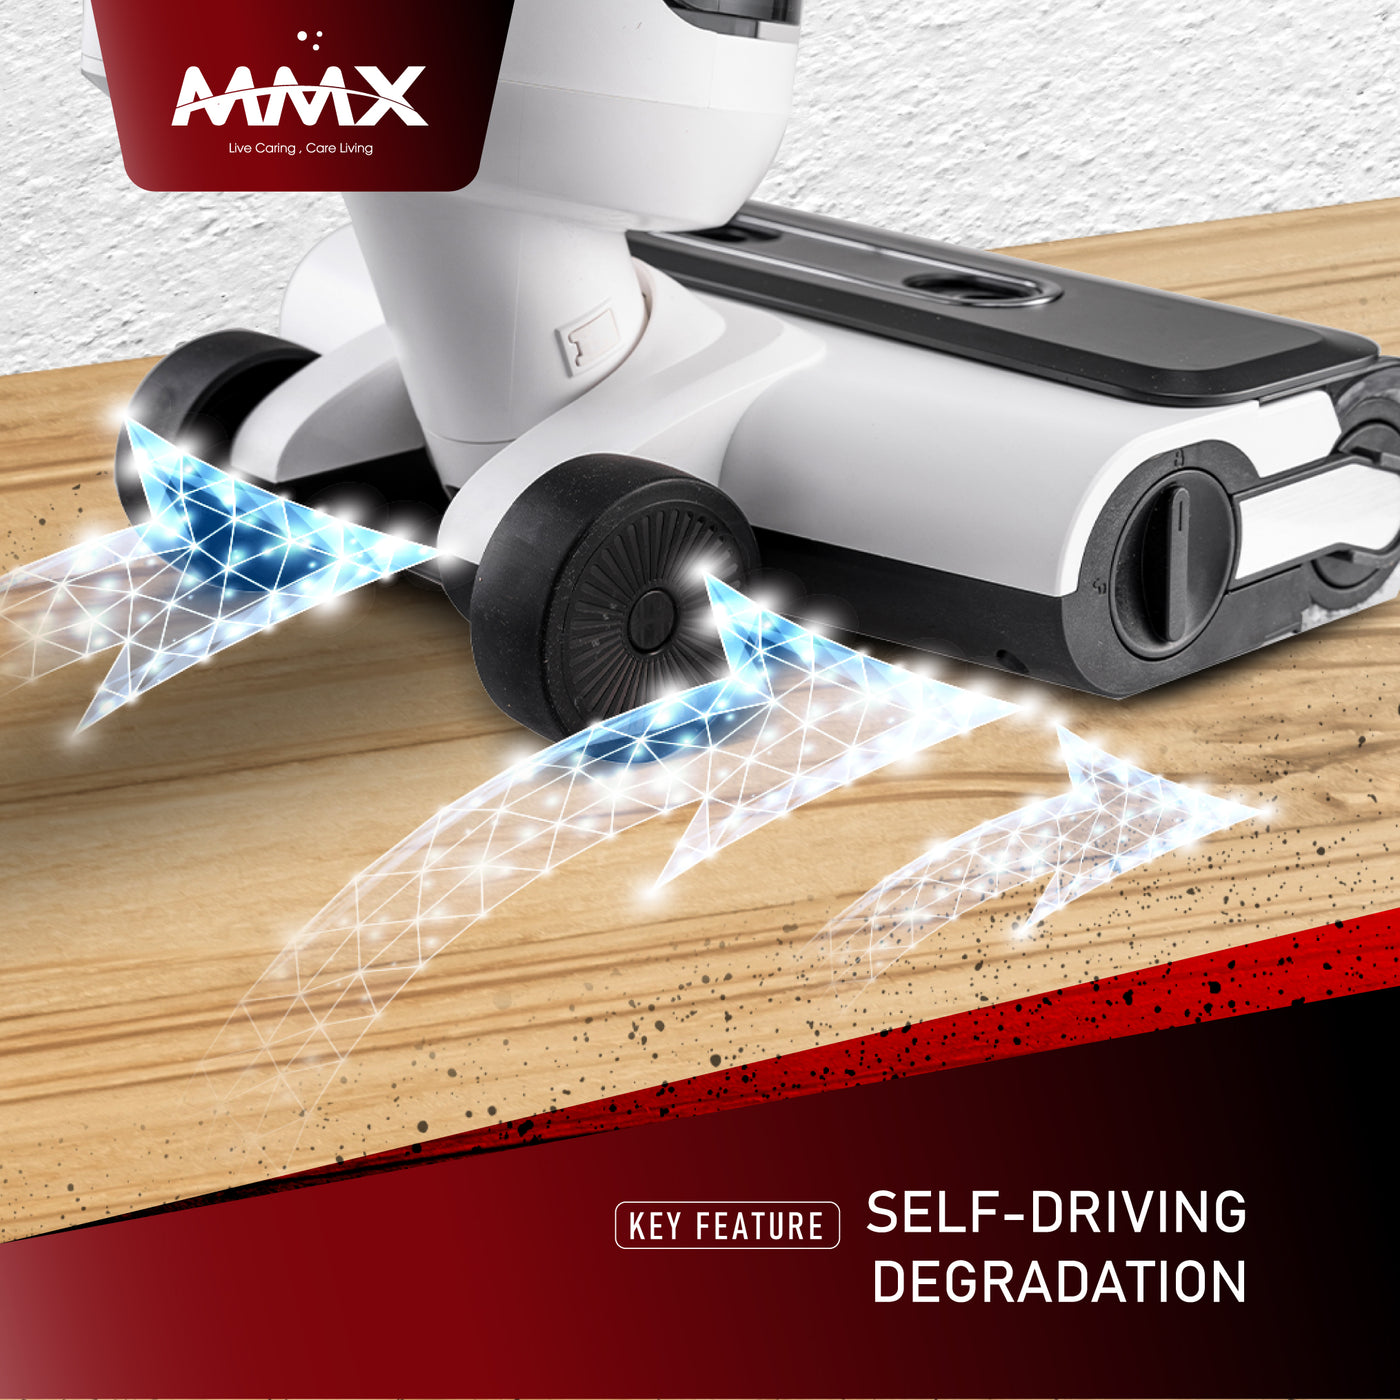 Aero Max iPro S878+ Smart Wet & Dry IPX4 Cordless Floor Washer